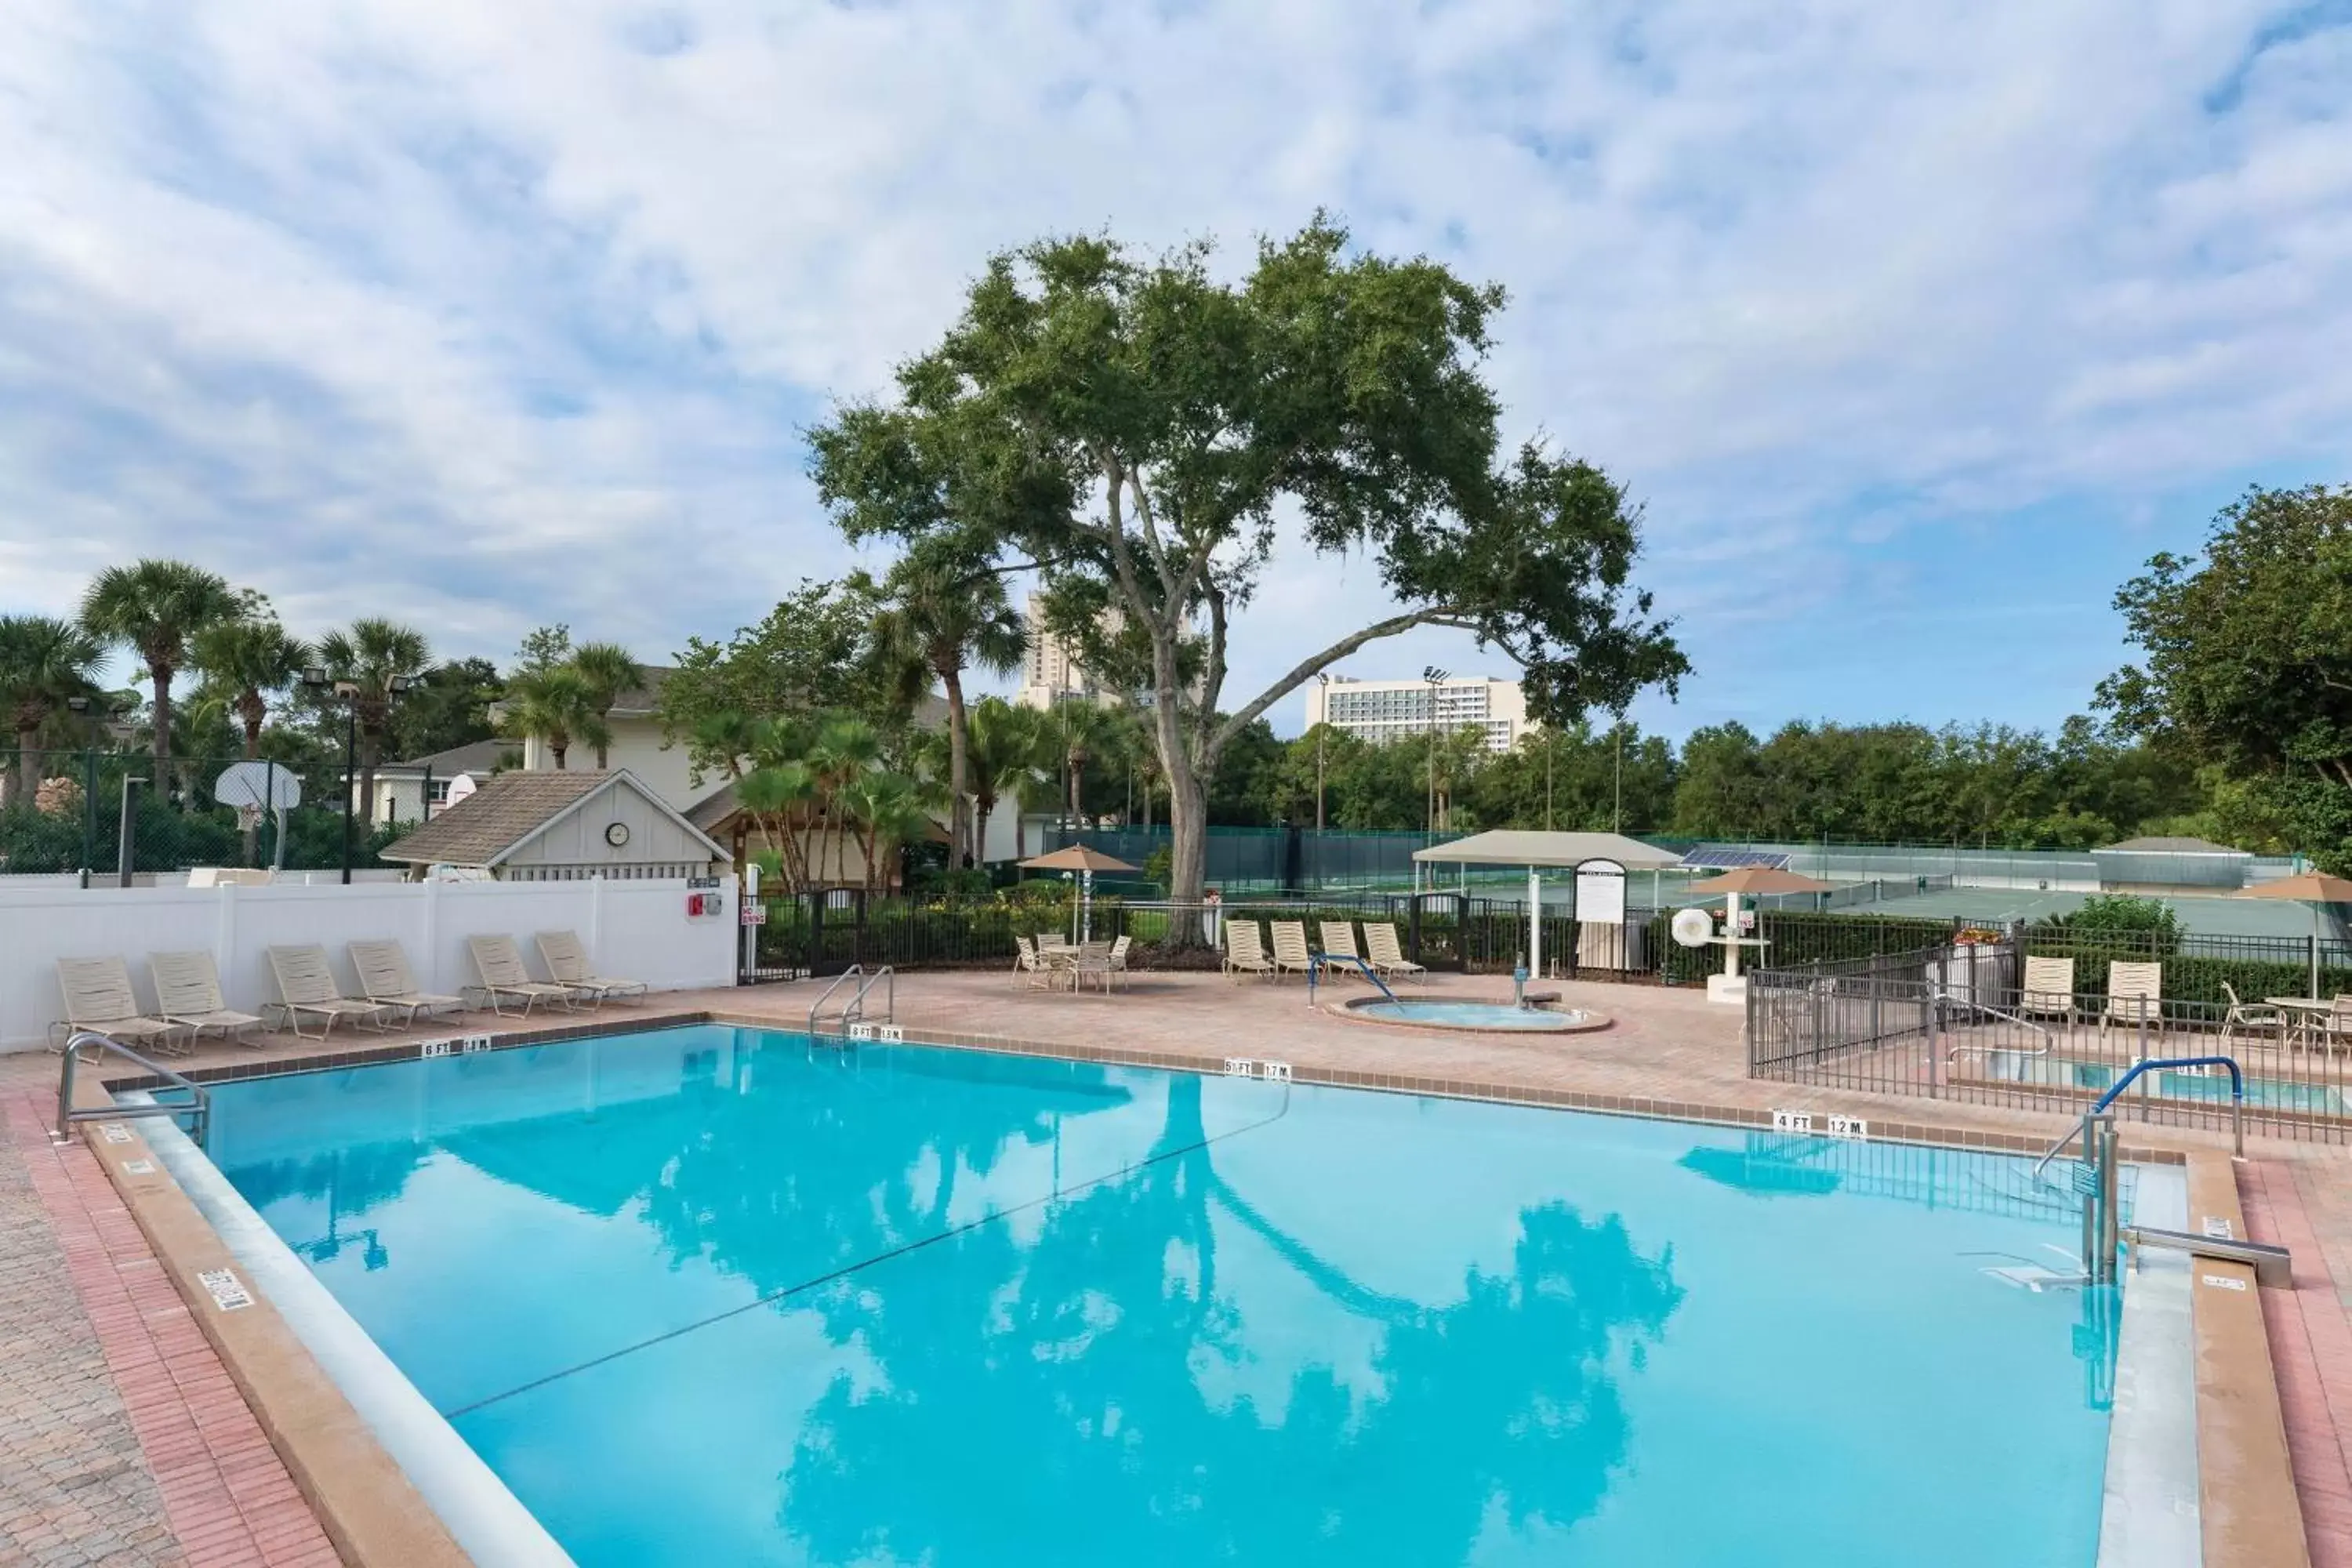 Swimming Pool in Sheraton Vistana Resort Villas, Lake Buena Vista Orlando